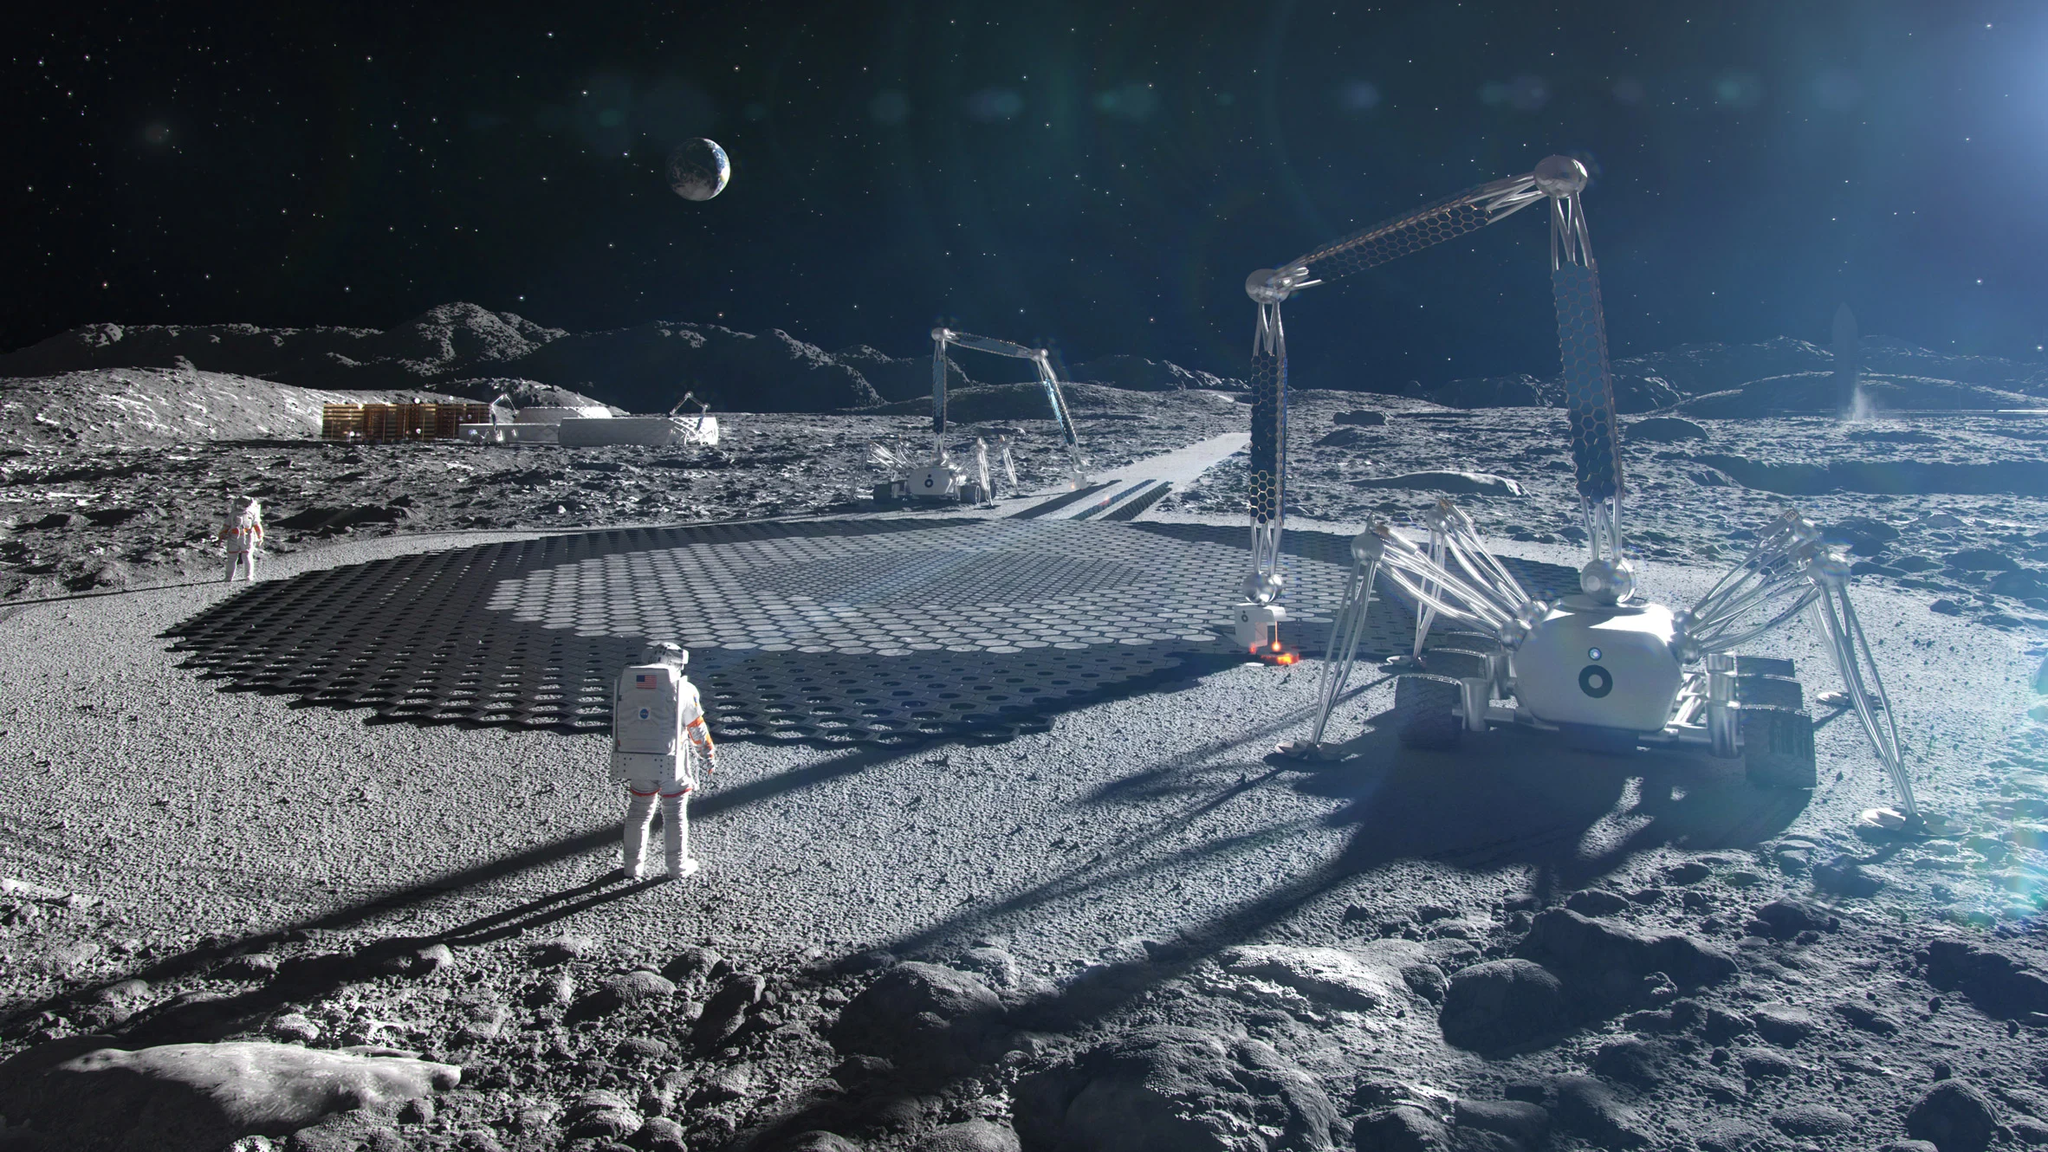 More information about "Κατασκευές 3D-printing στη Σελήνη χρηματοδοτεί η NASA"